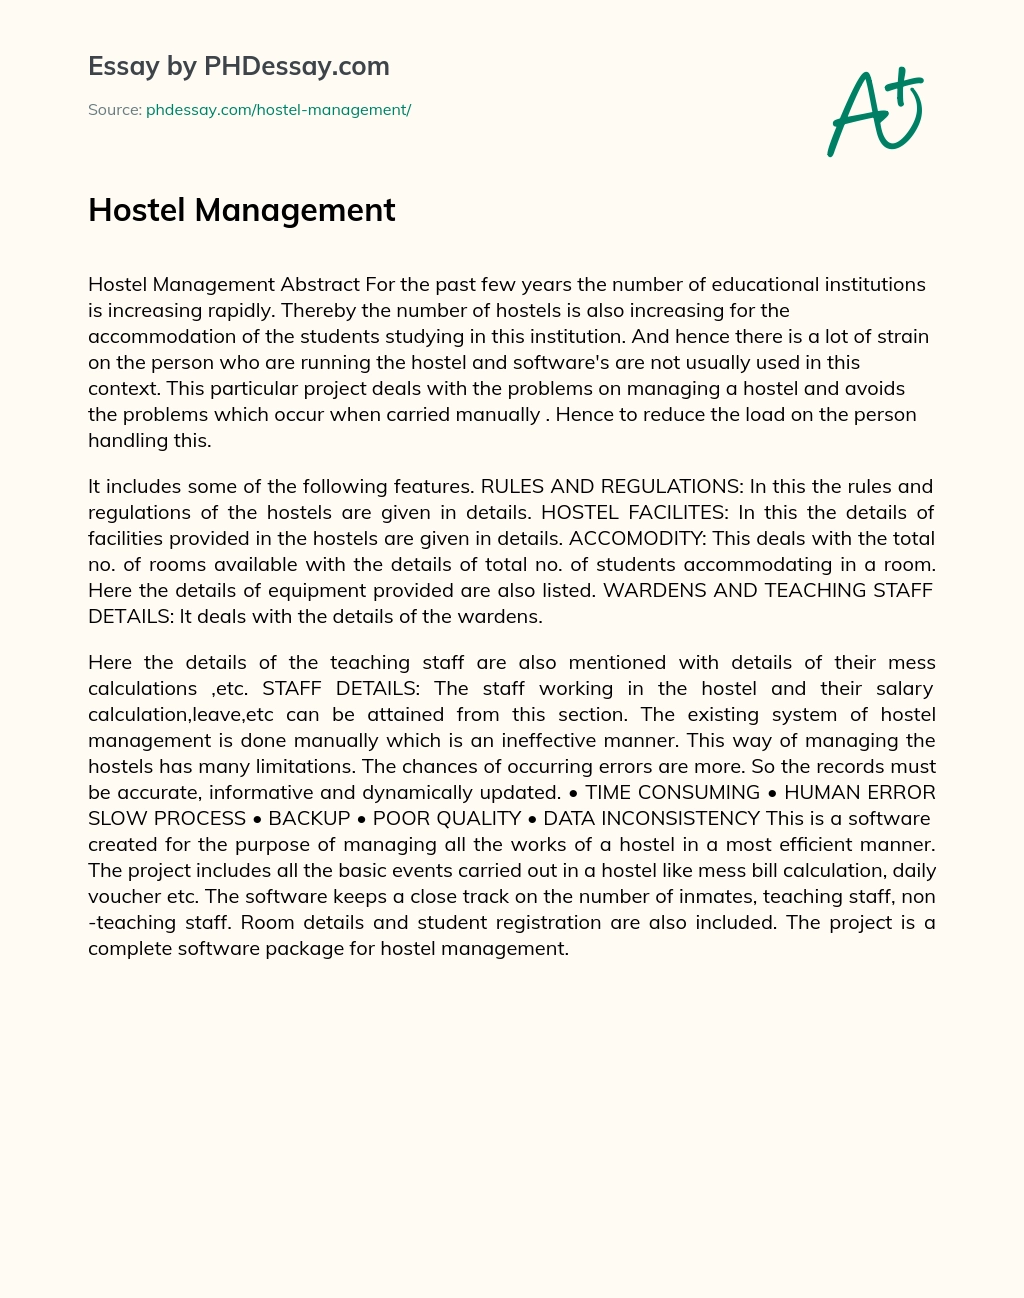 Hostel Management essay